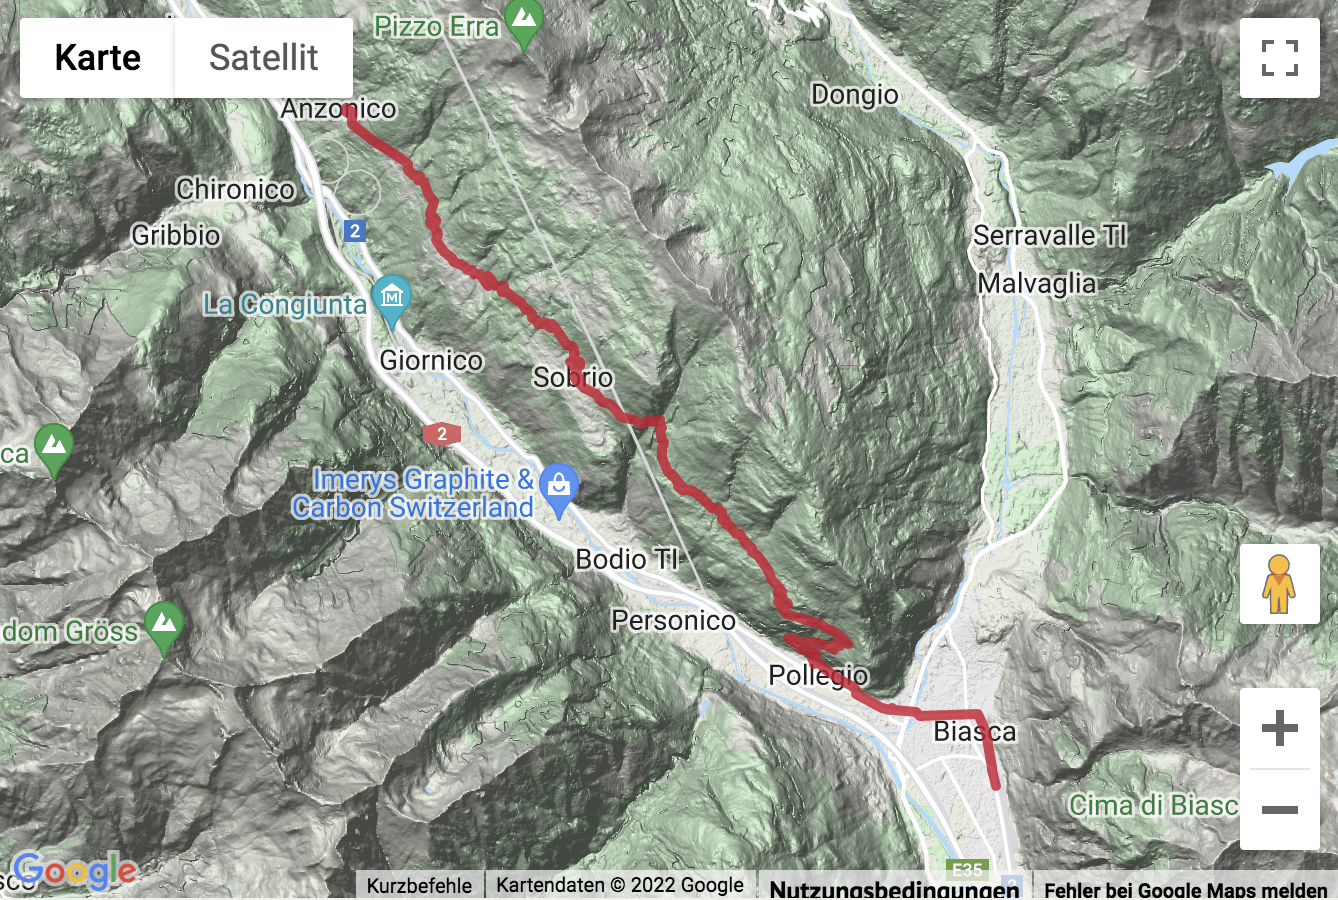 Carte de situation Wanderung auf der Strada Alta Anzonico nach Biasca